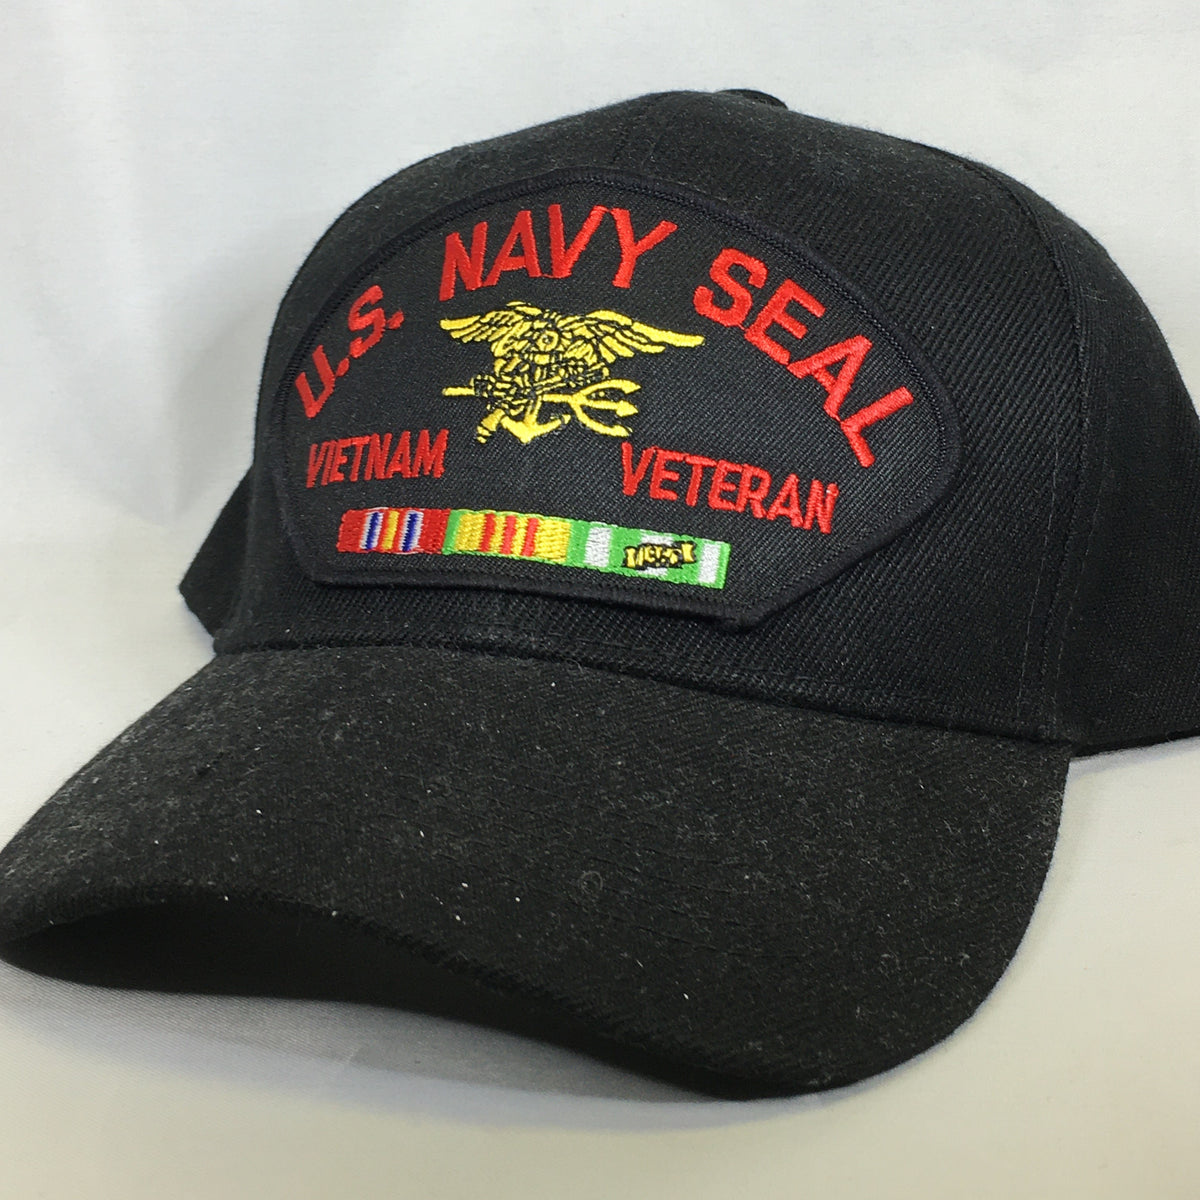 US Navy Seal Vietnam Veteran Cap